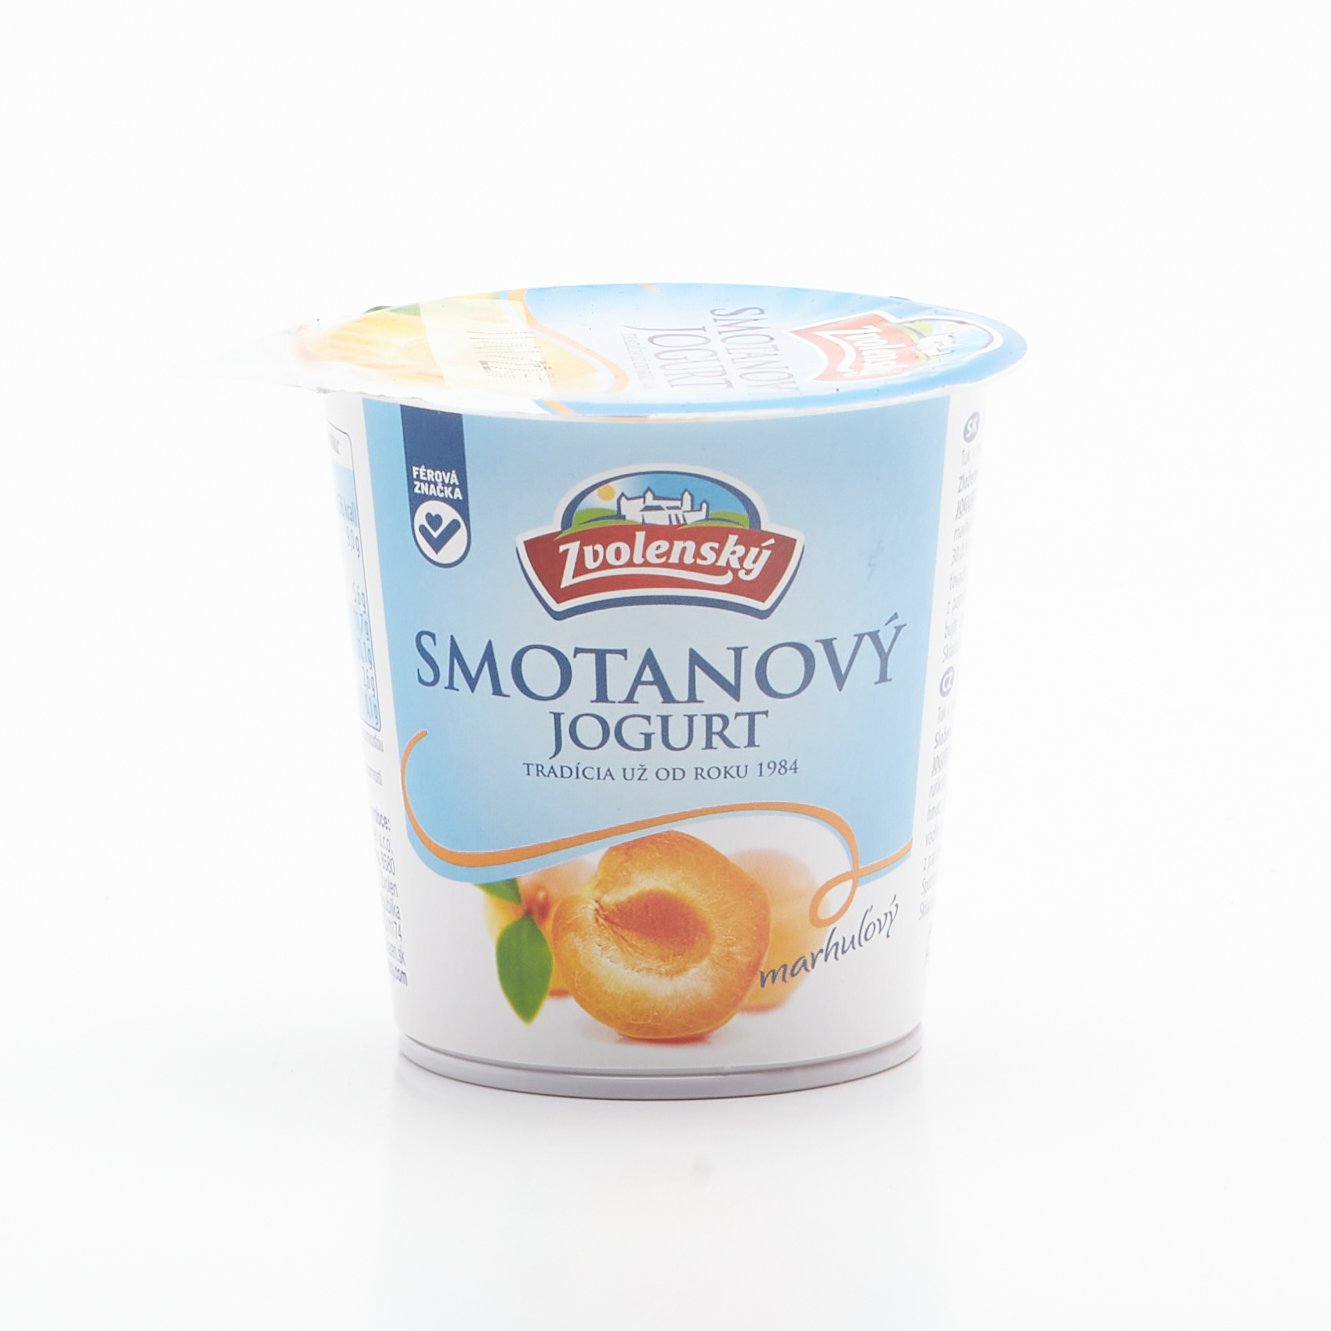 Zvolenský smotanový jogurt marhuľa 145g